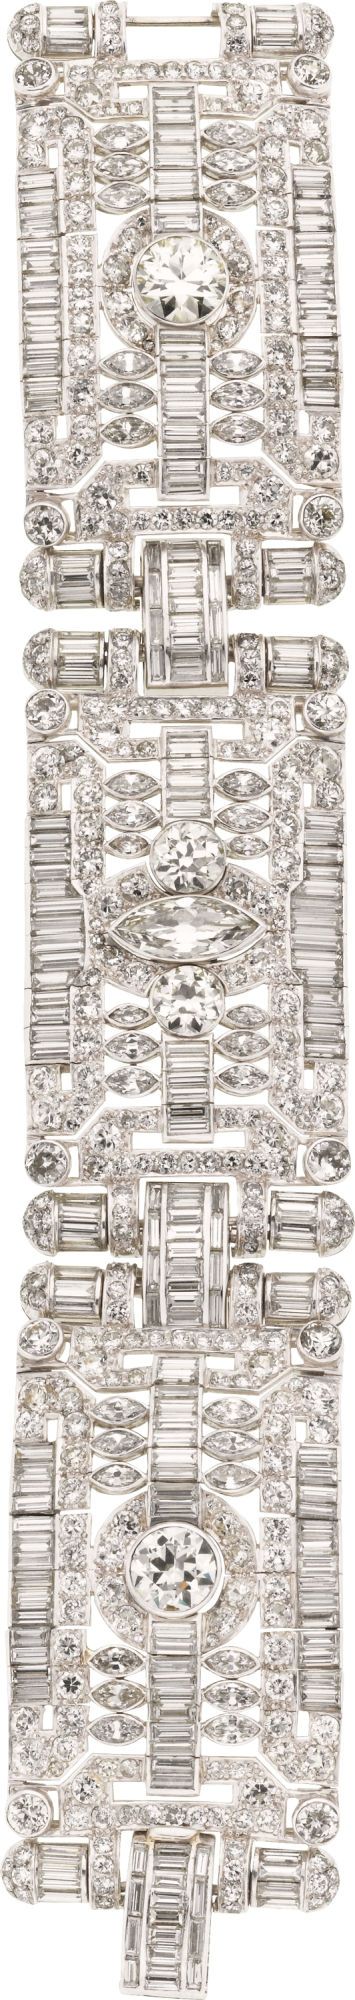 Luxury  Estate Platinum Diamond Bracelet. |Classy & Elegant | ✿ڿڰۣ NYRockPh...